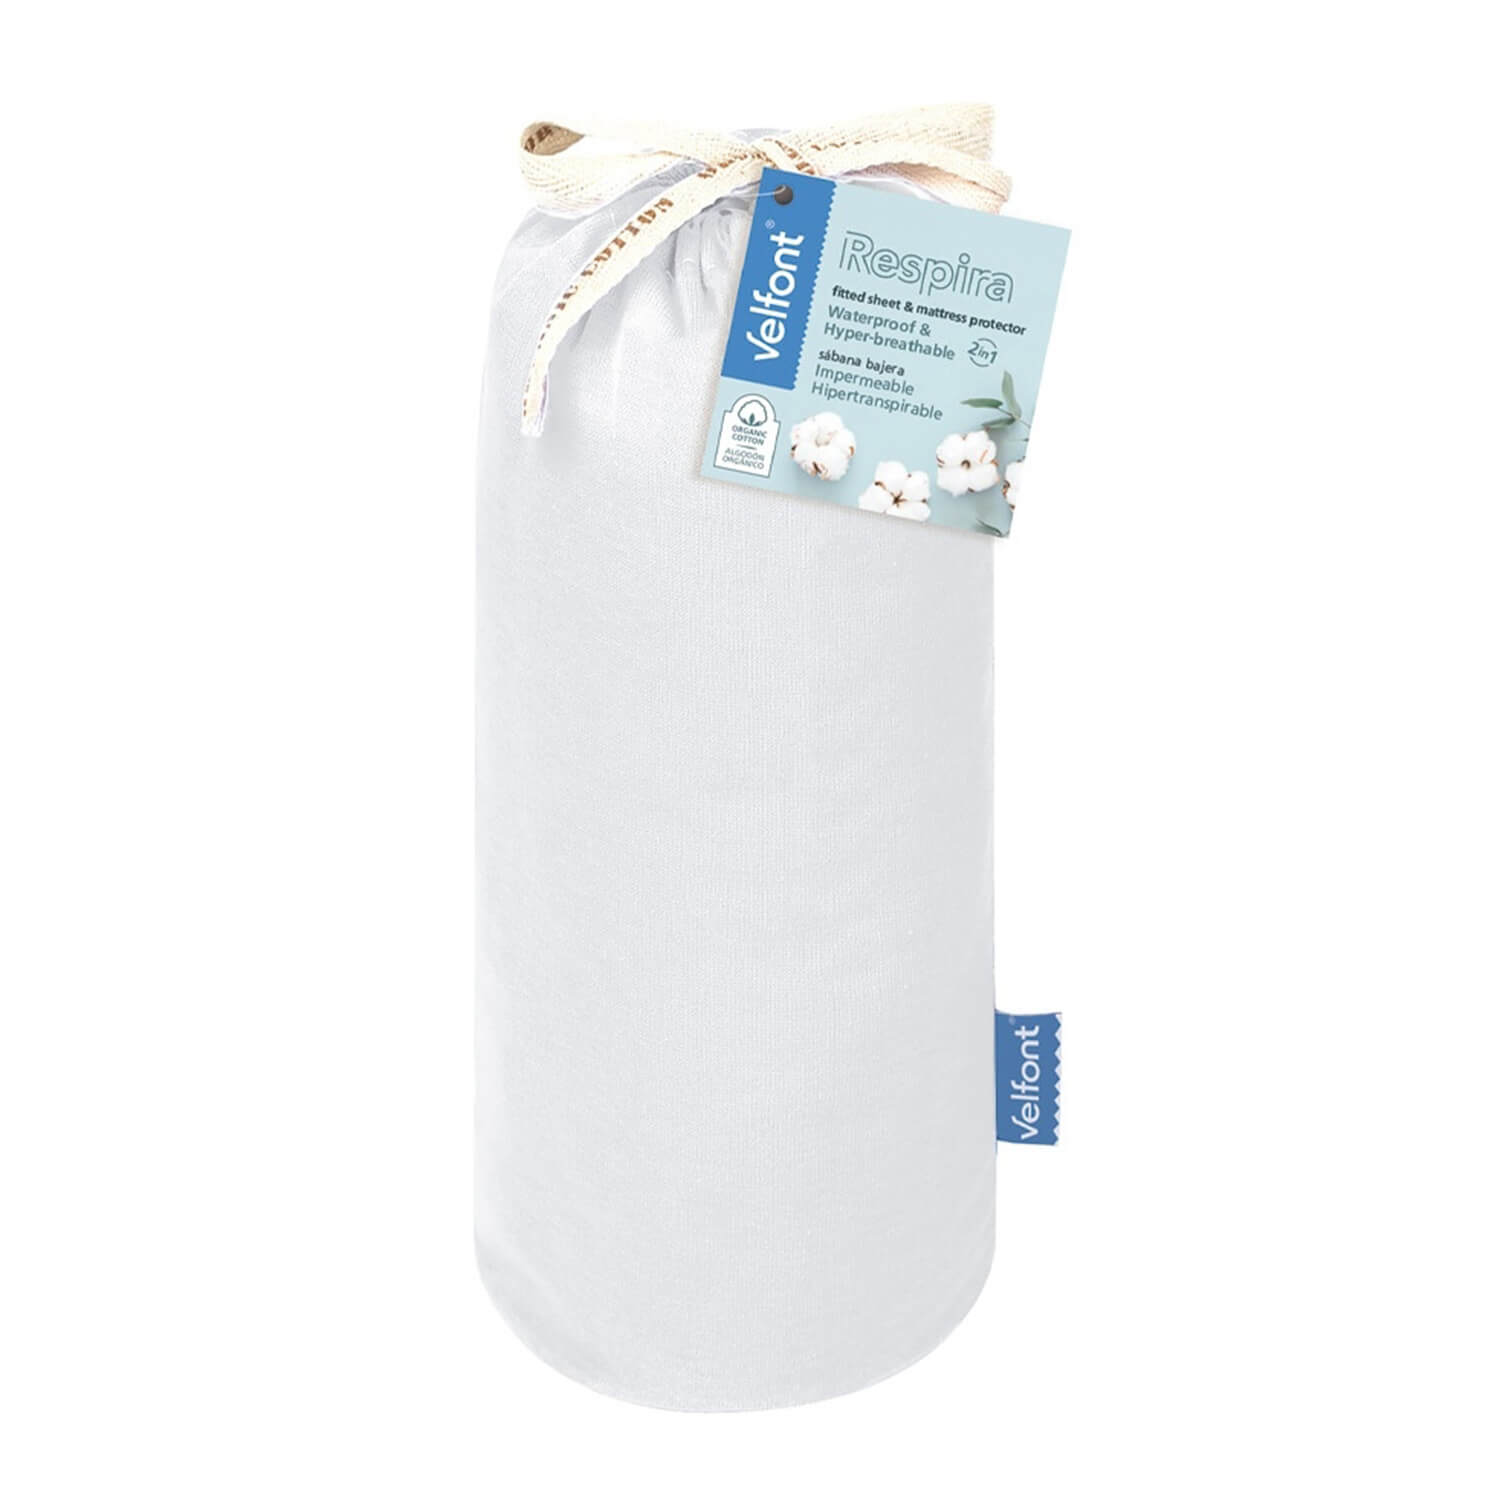 Respira mattress protector 40/45 cm